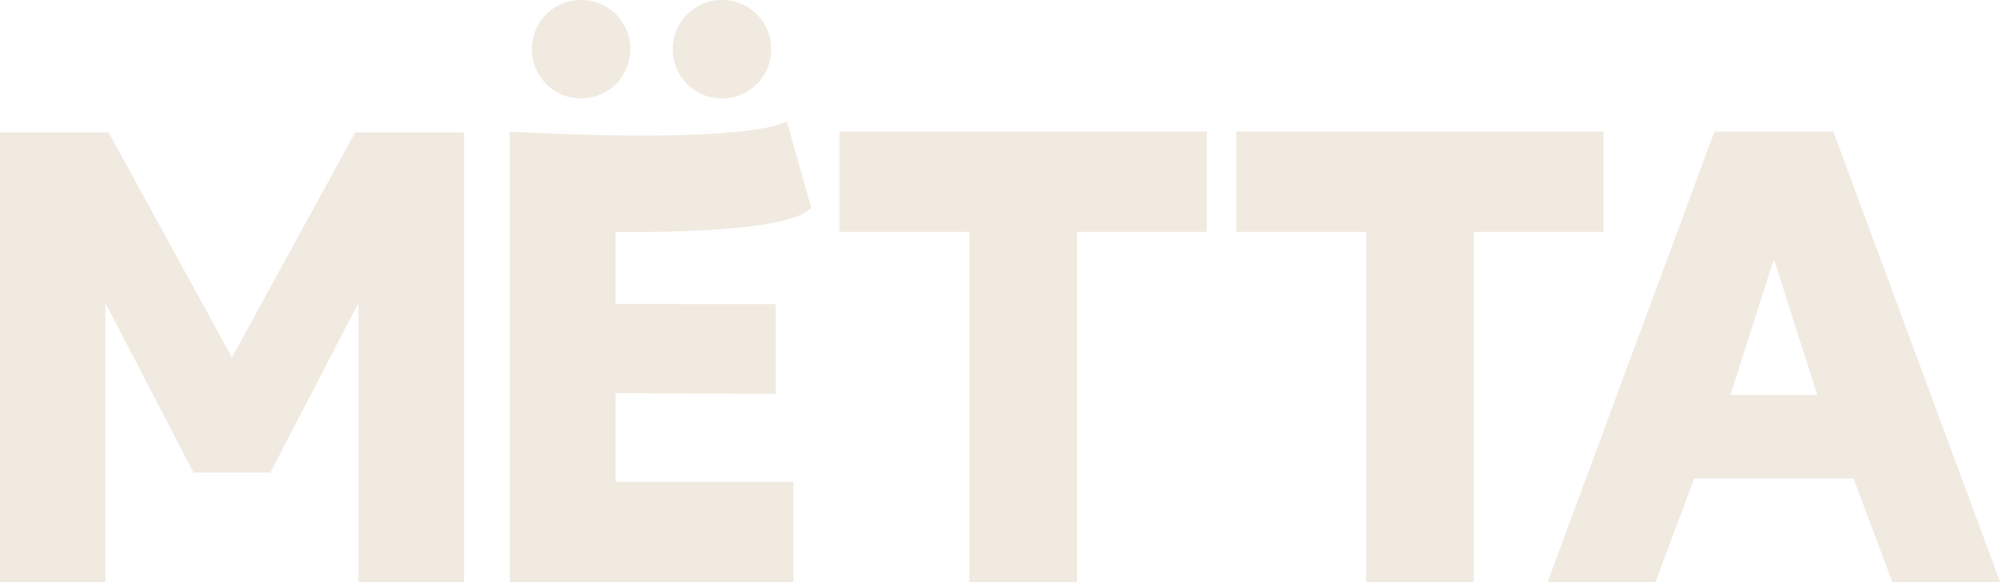 Mëtta hjälpcenter logo